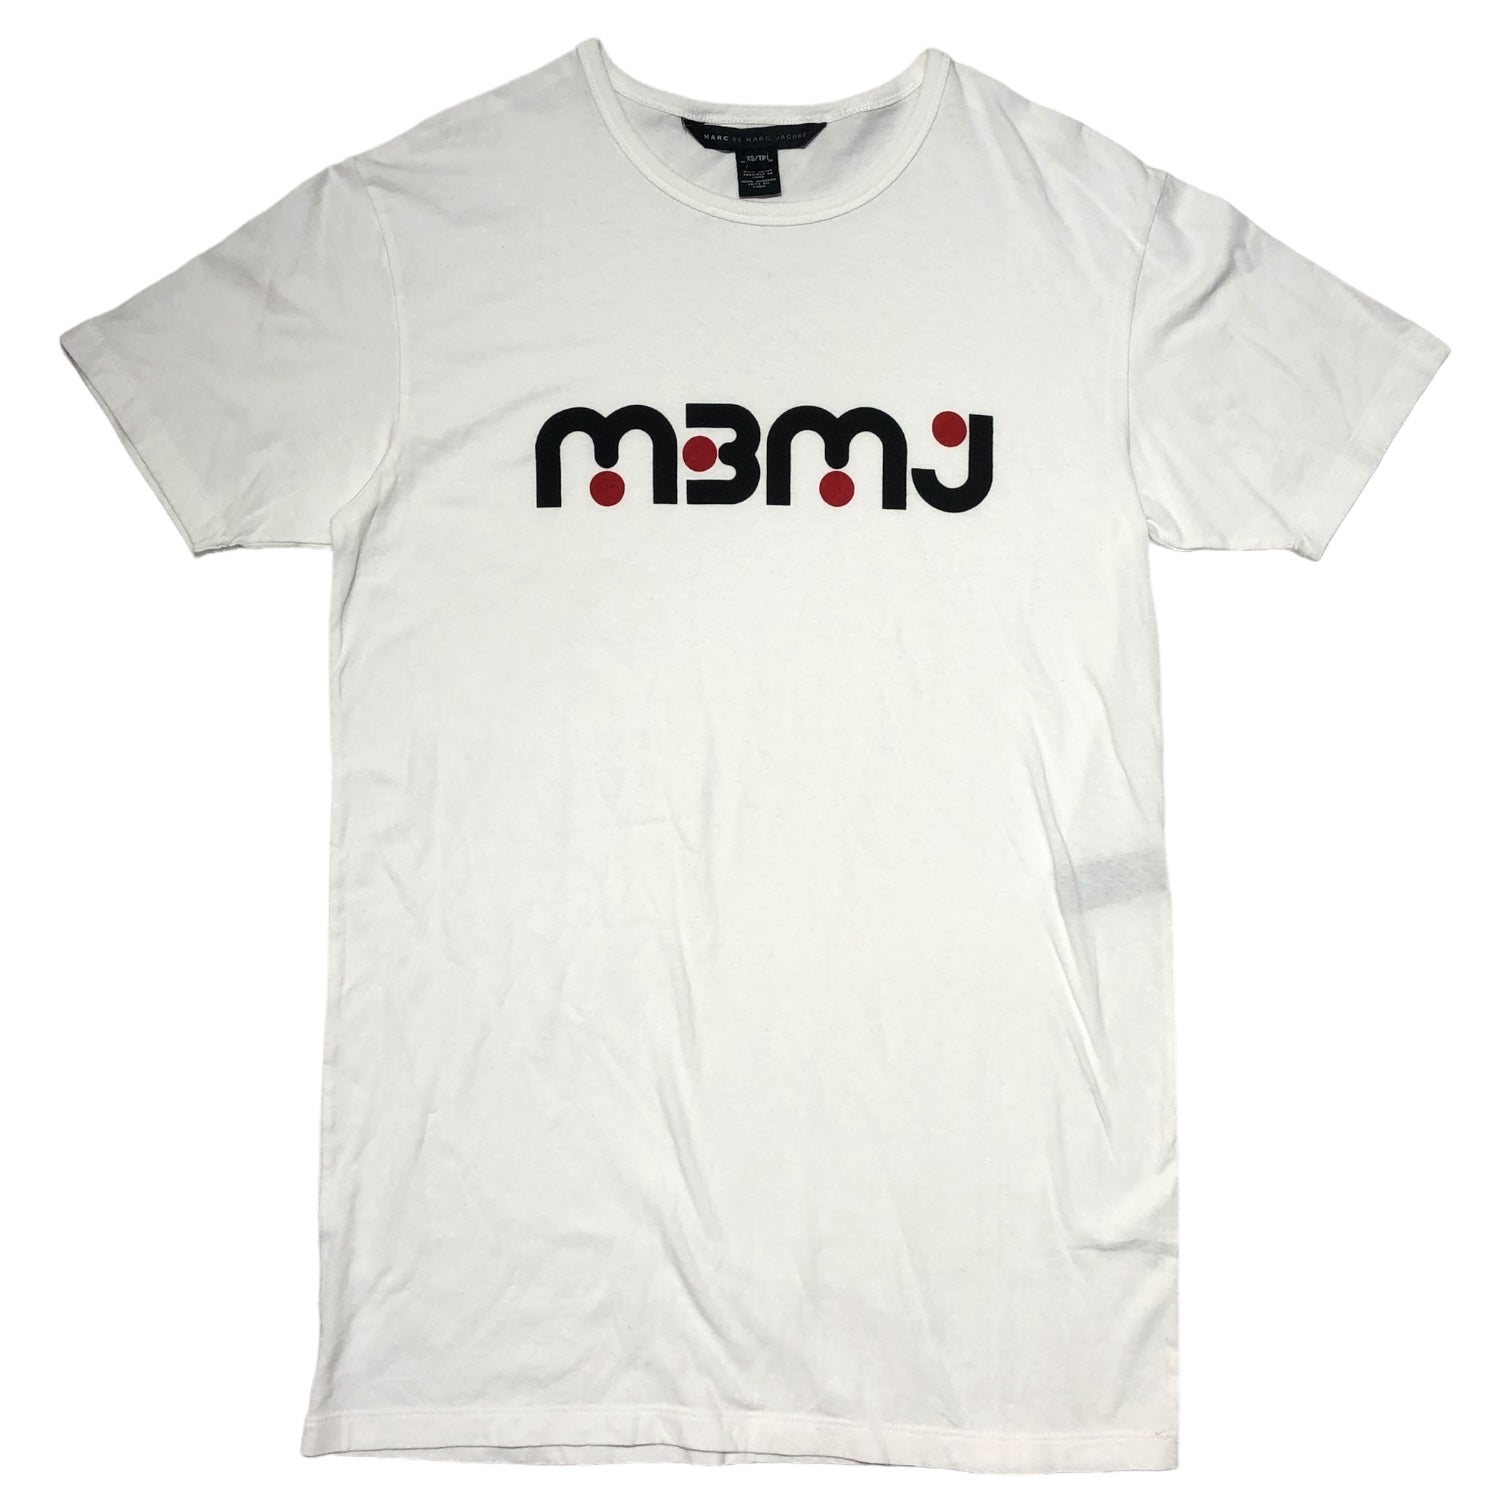 MARC by MARC JACOBS(マークバイマークジェイコブス) MBMJロゴTシャツ XS ホワイト